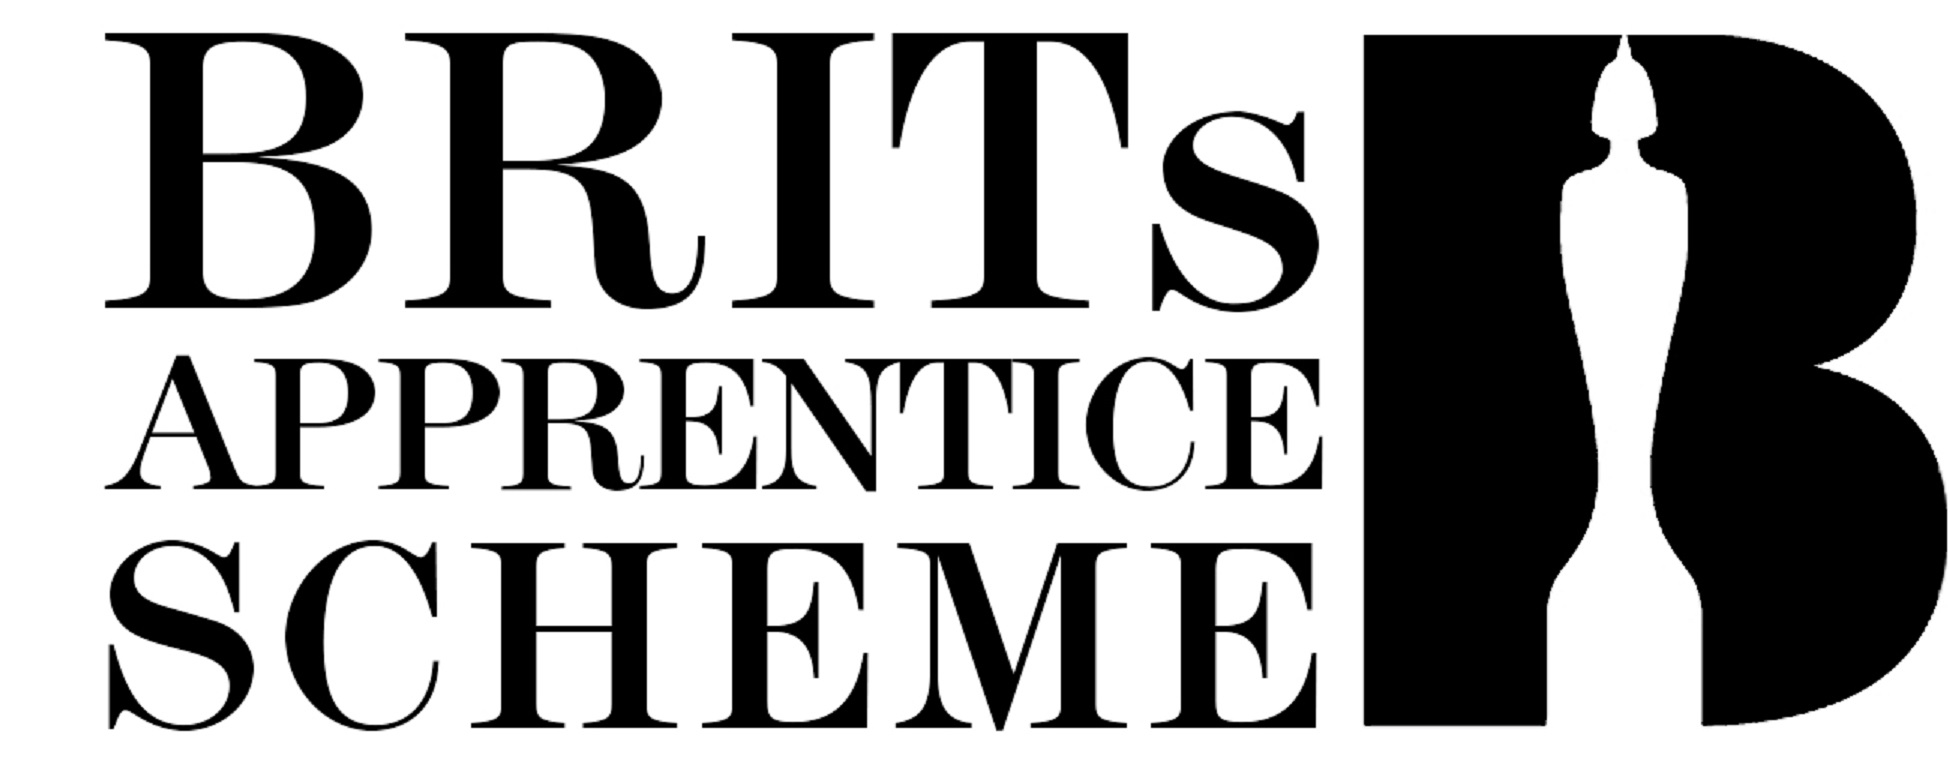 The Brits apprentice scheme